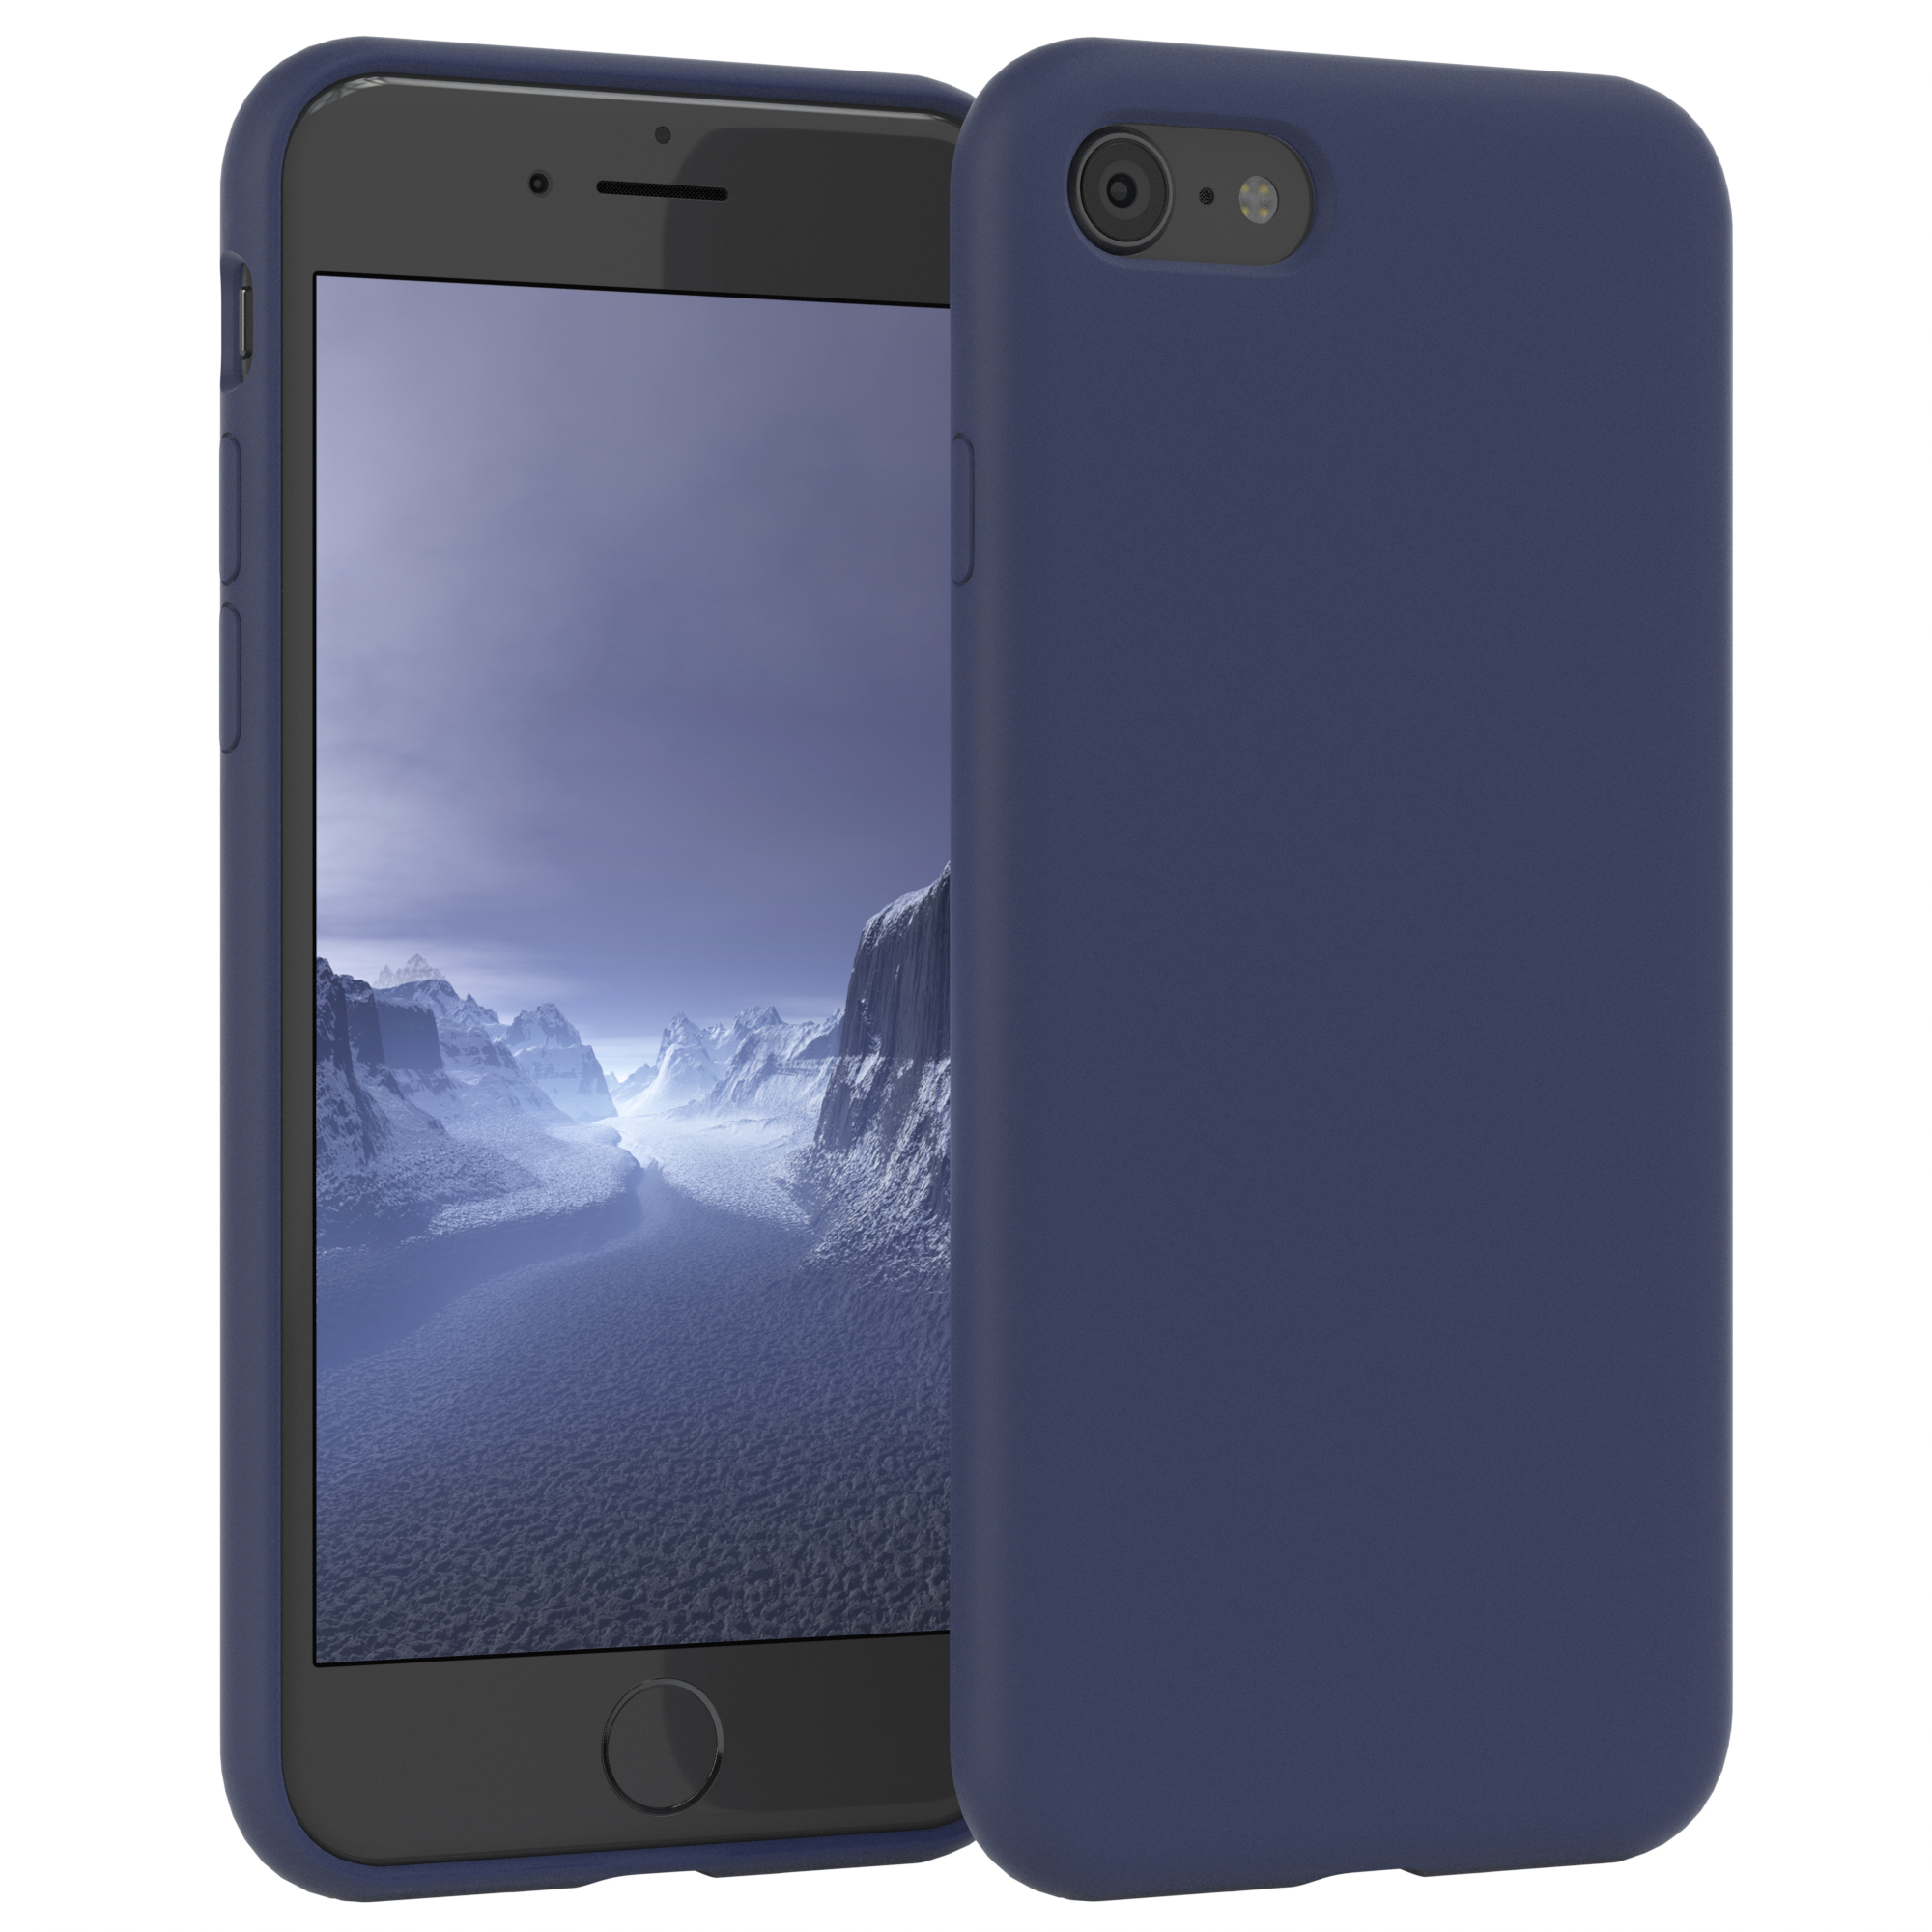 Backcover, CASE 8, SE SE 2022 7 / Apple, / iPhone Premium Handycase, Silikon Nachtblau 2020, EAZY Blau / iPhone